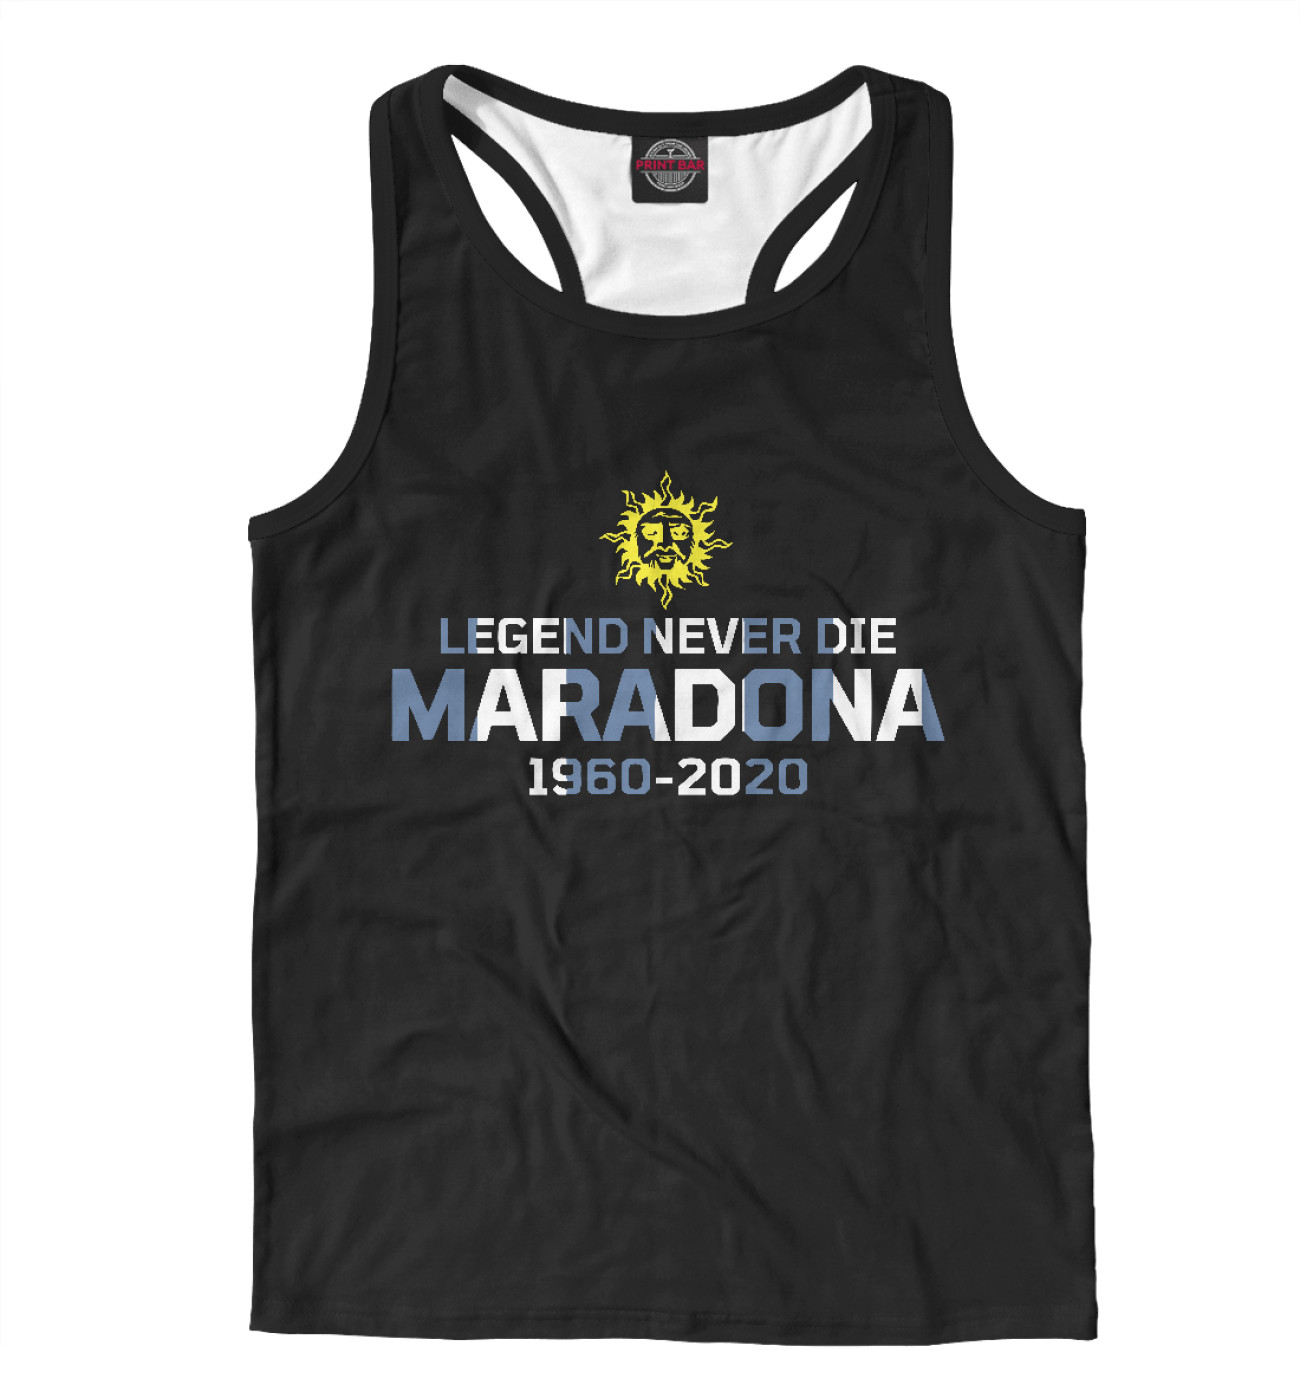 Мужская Борцовка Maradona, артикул: FLT-676440-mayb-2